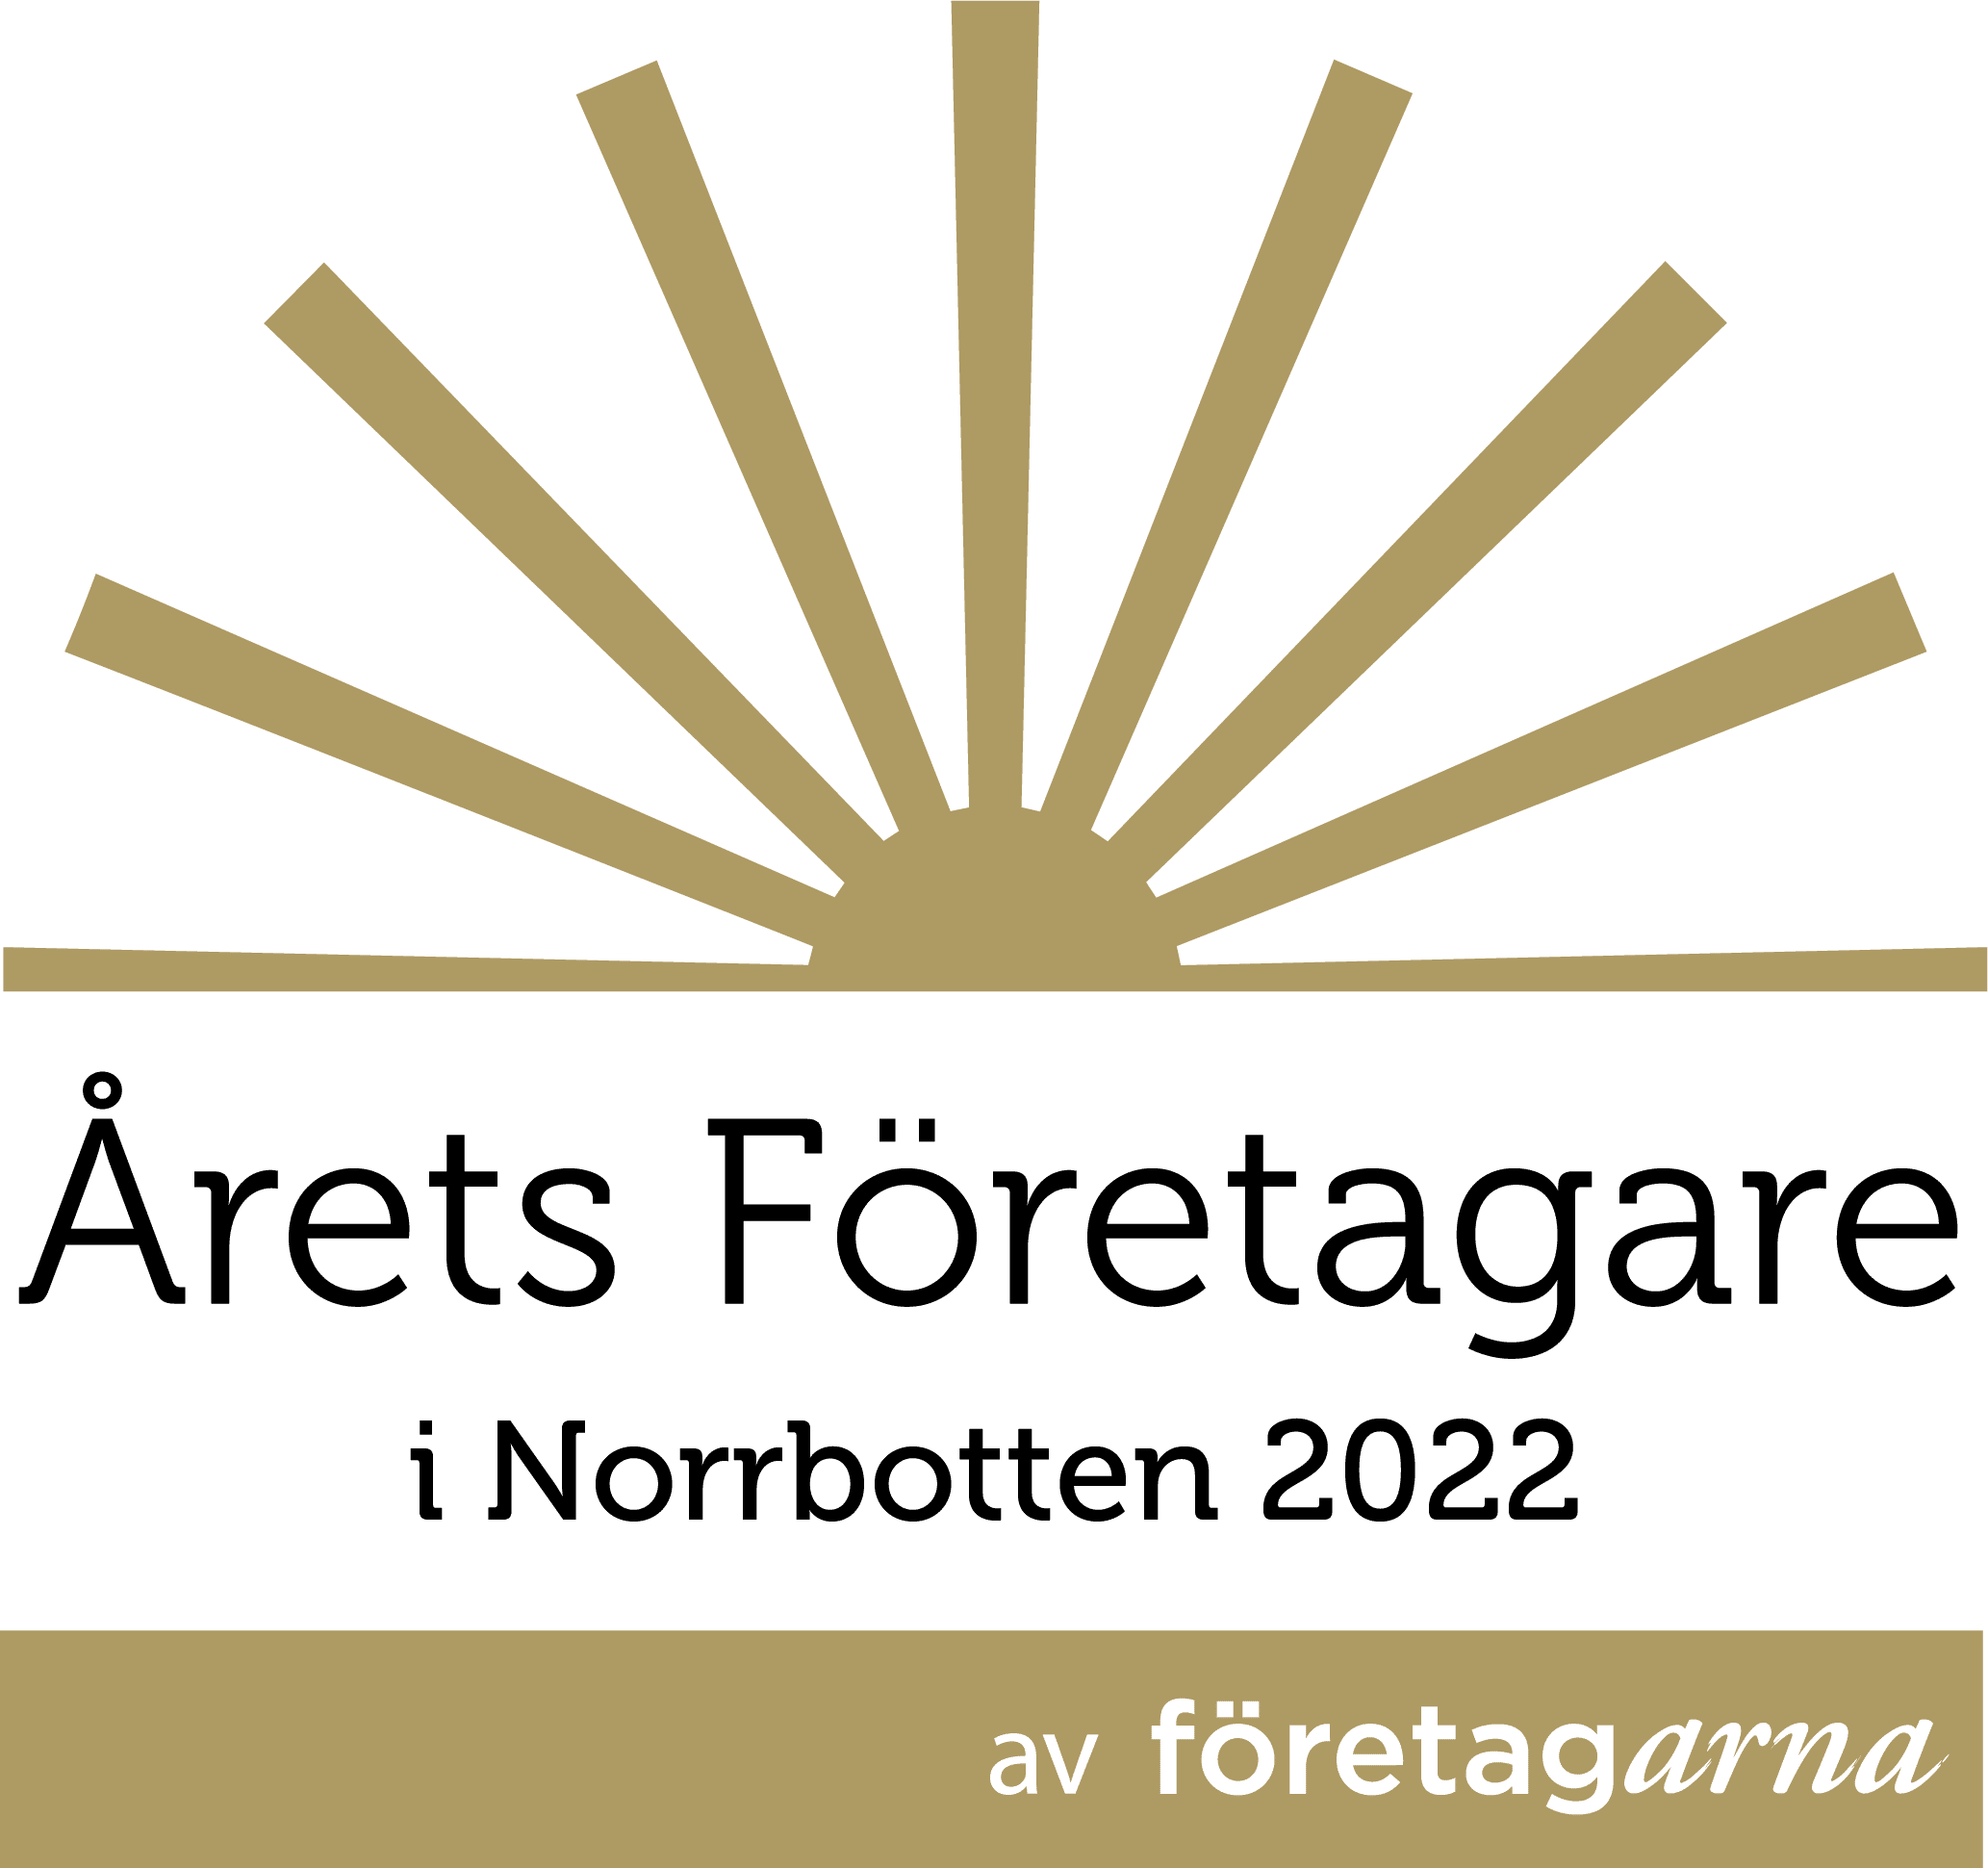 Year 2022 - Jonas, David and Andreas Wiklund were named Entrepreneurs of the Year in Norrbotten organized by Företagarna.